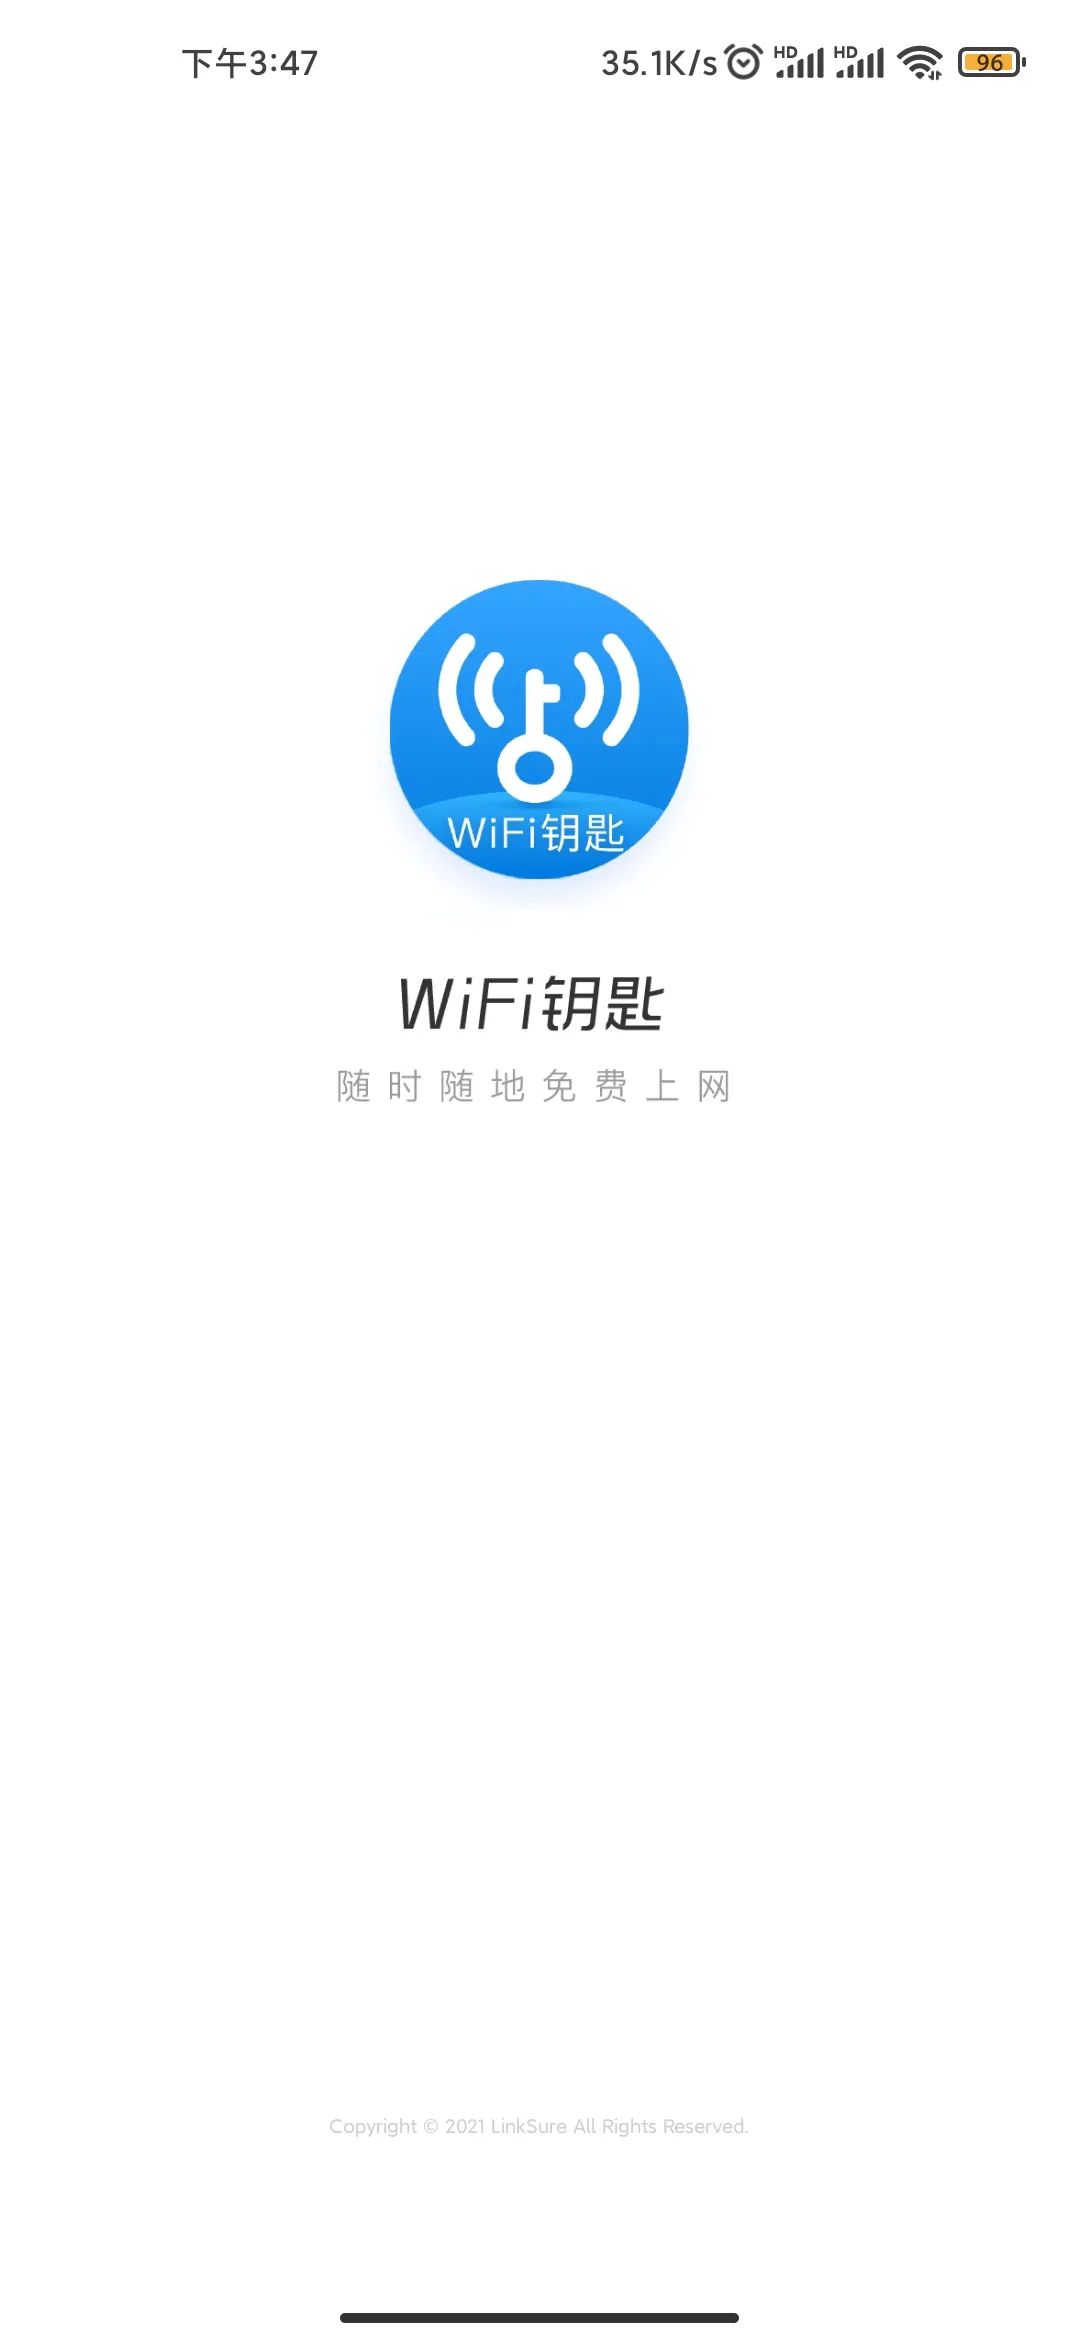 WIFI钥匙app，自带浏览器，无广告，还支持分享查看密码哦！